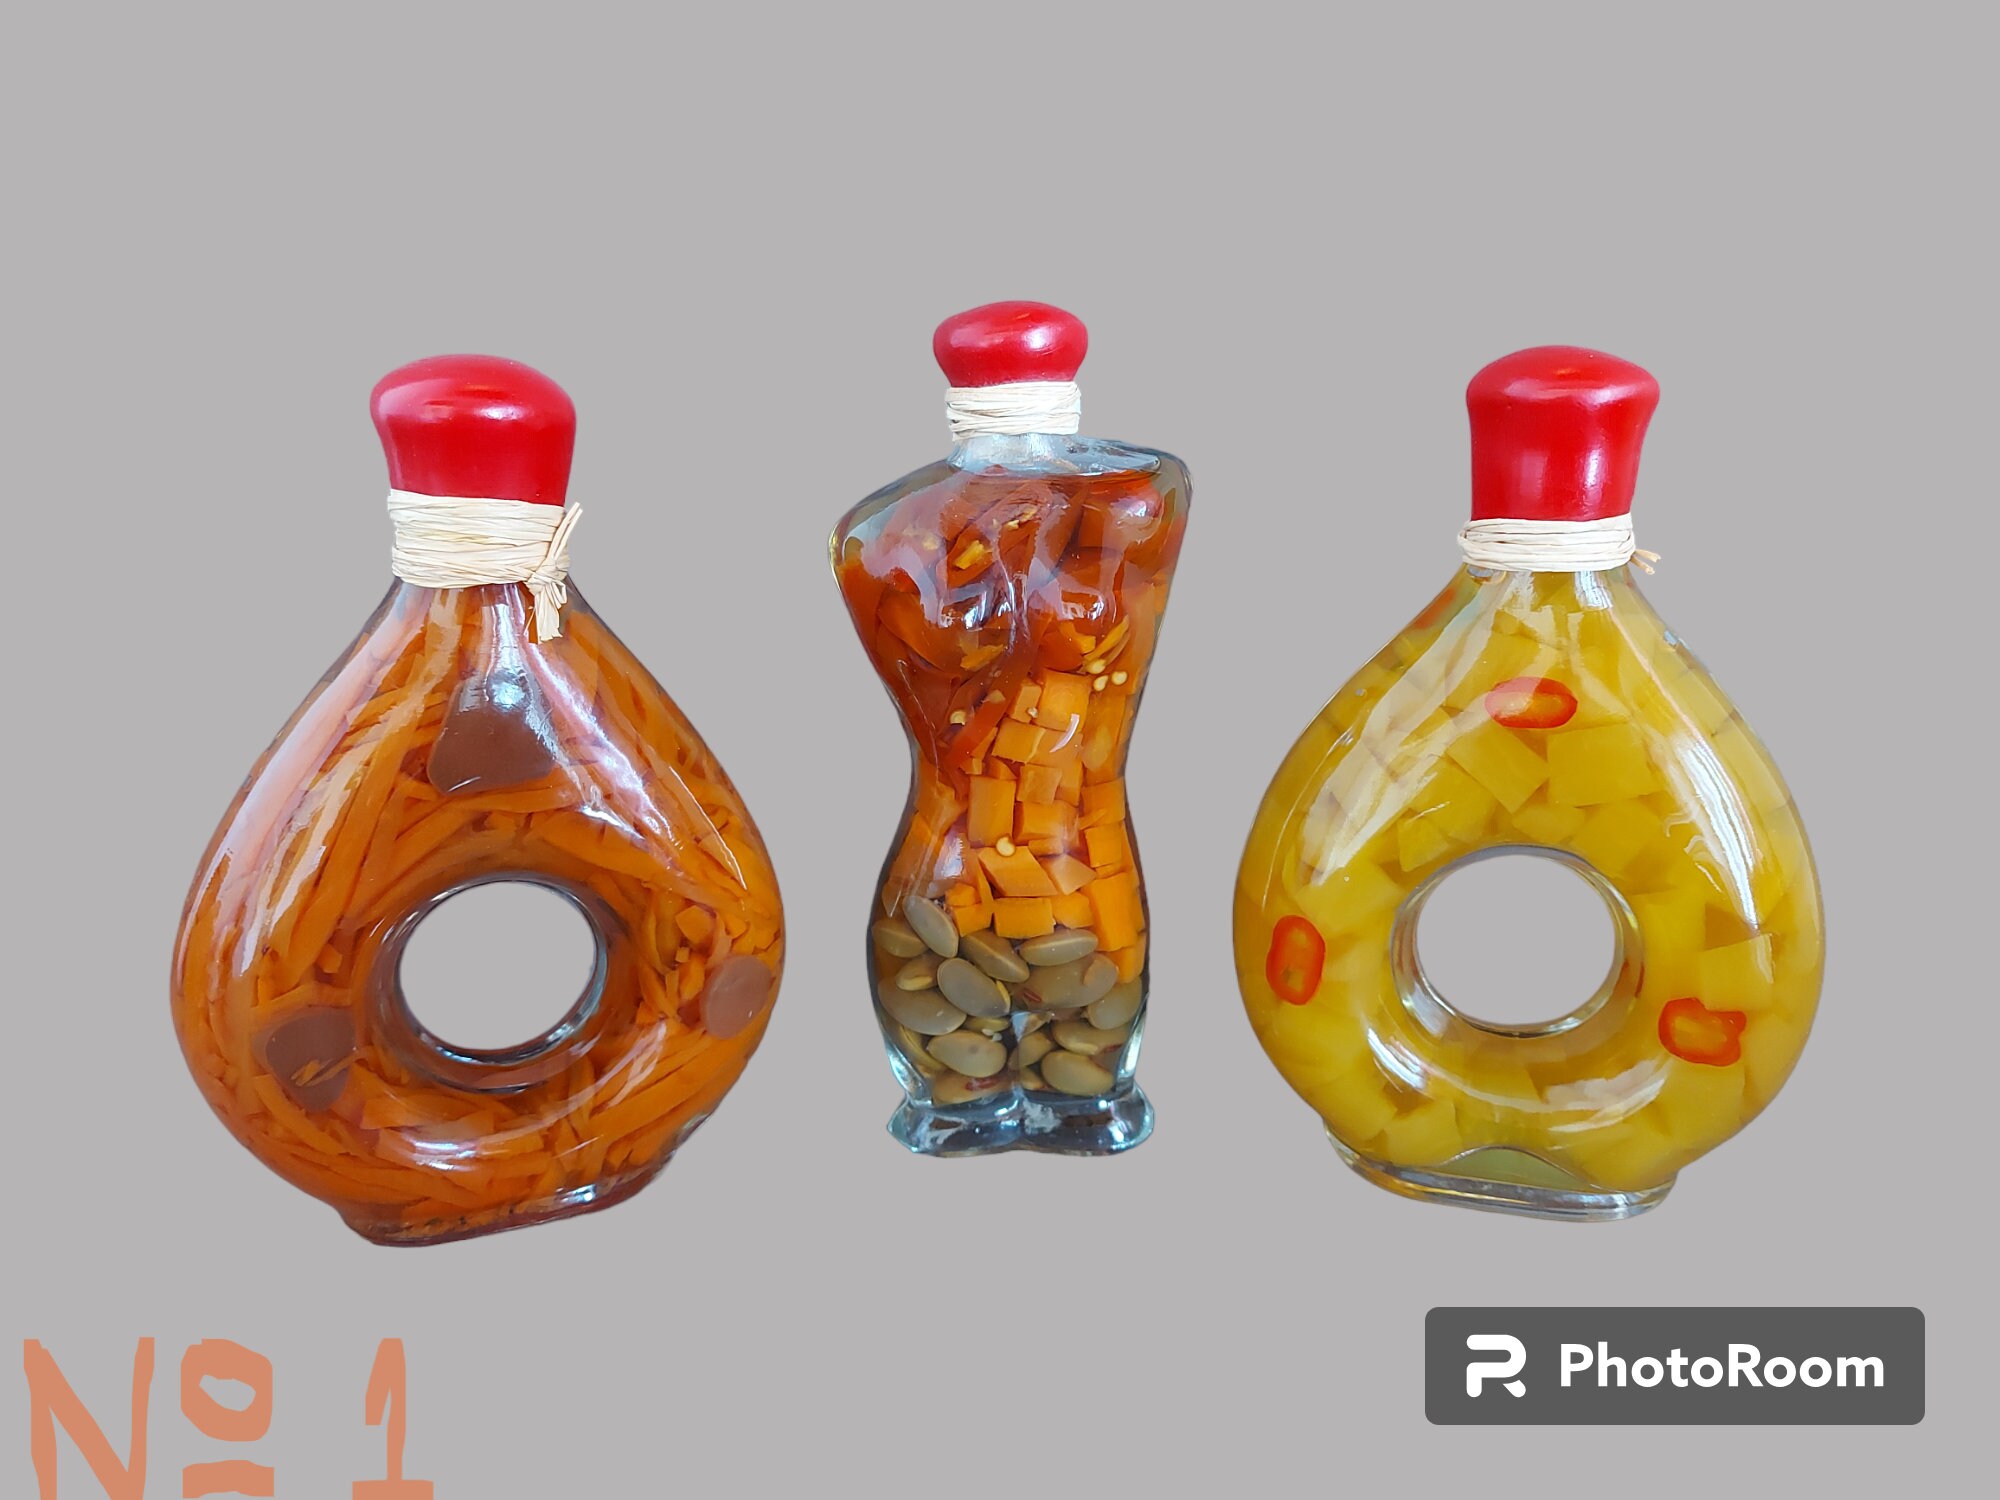 Creative Decorative Bottles With Infused Vinegar Vegetables & Fruits  Vintage Home Kitchen Decor Display Unique Gifts 